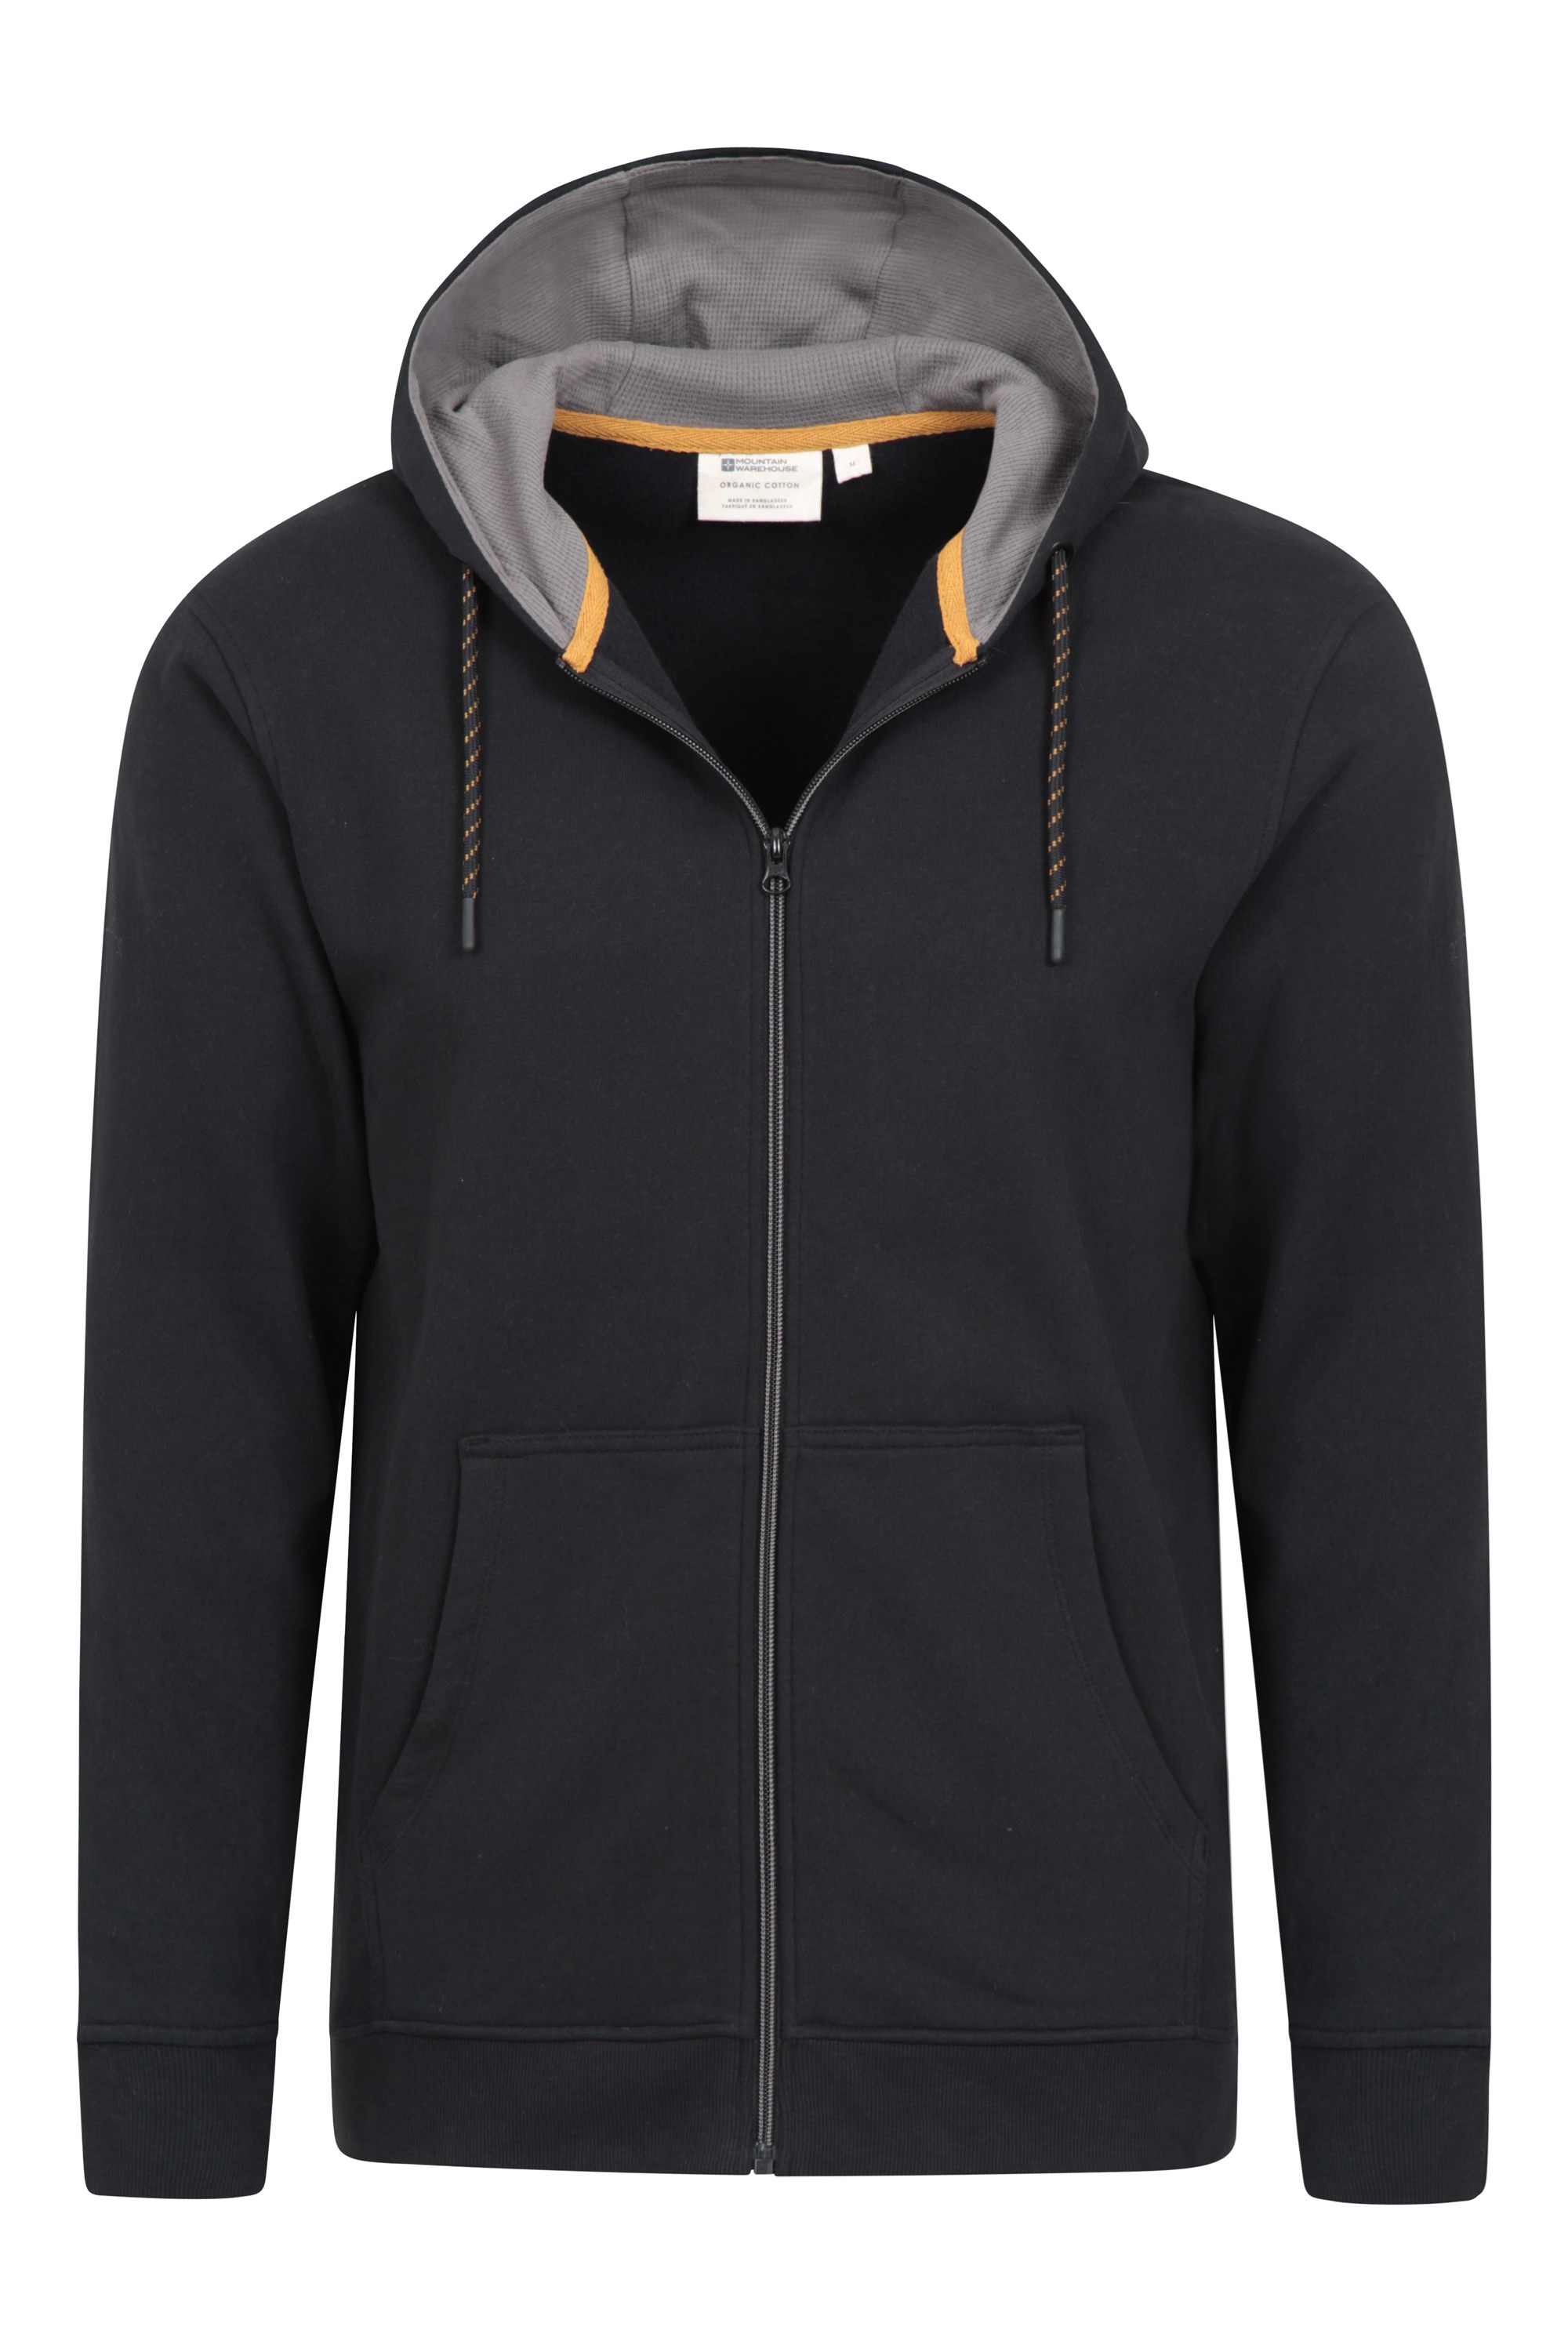 GRMO Men Outdoor Zip Up Long Sleeve Hooded Sweatshirt Jackets Caot 